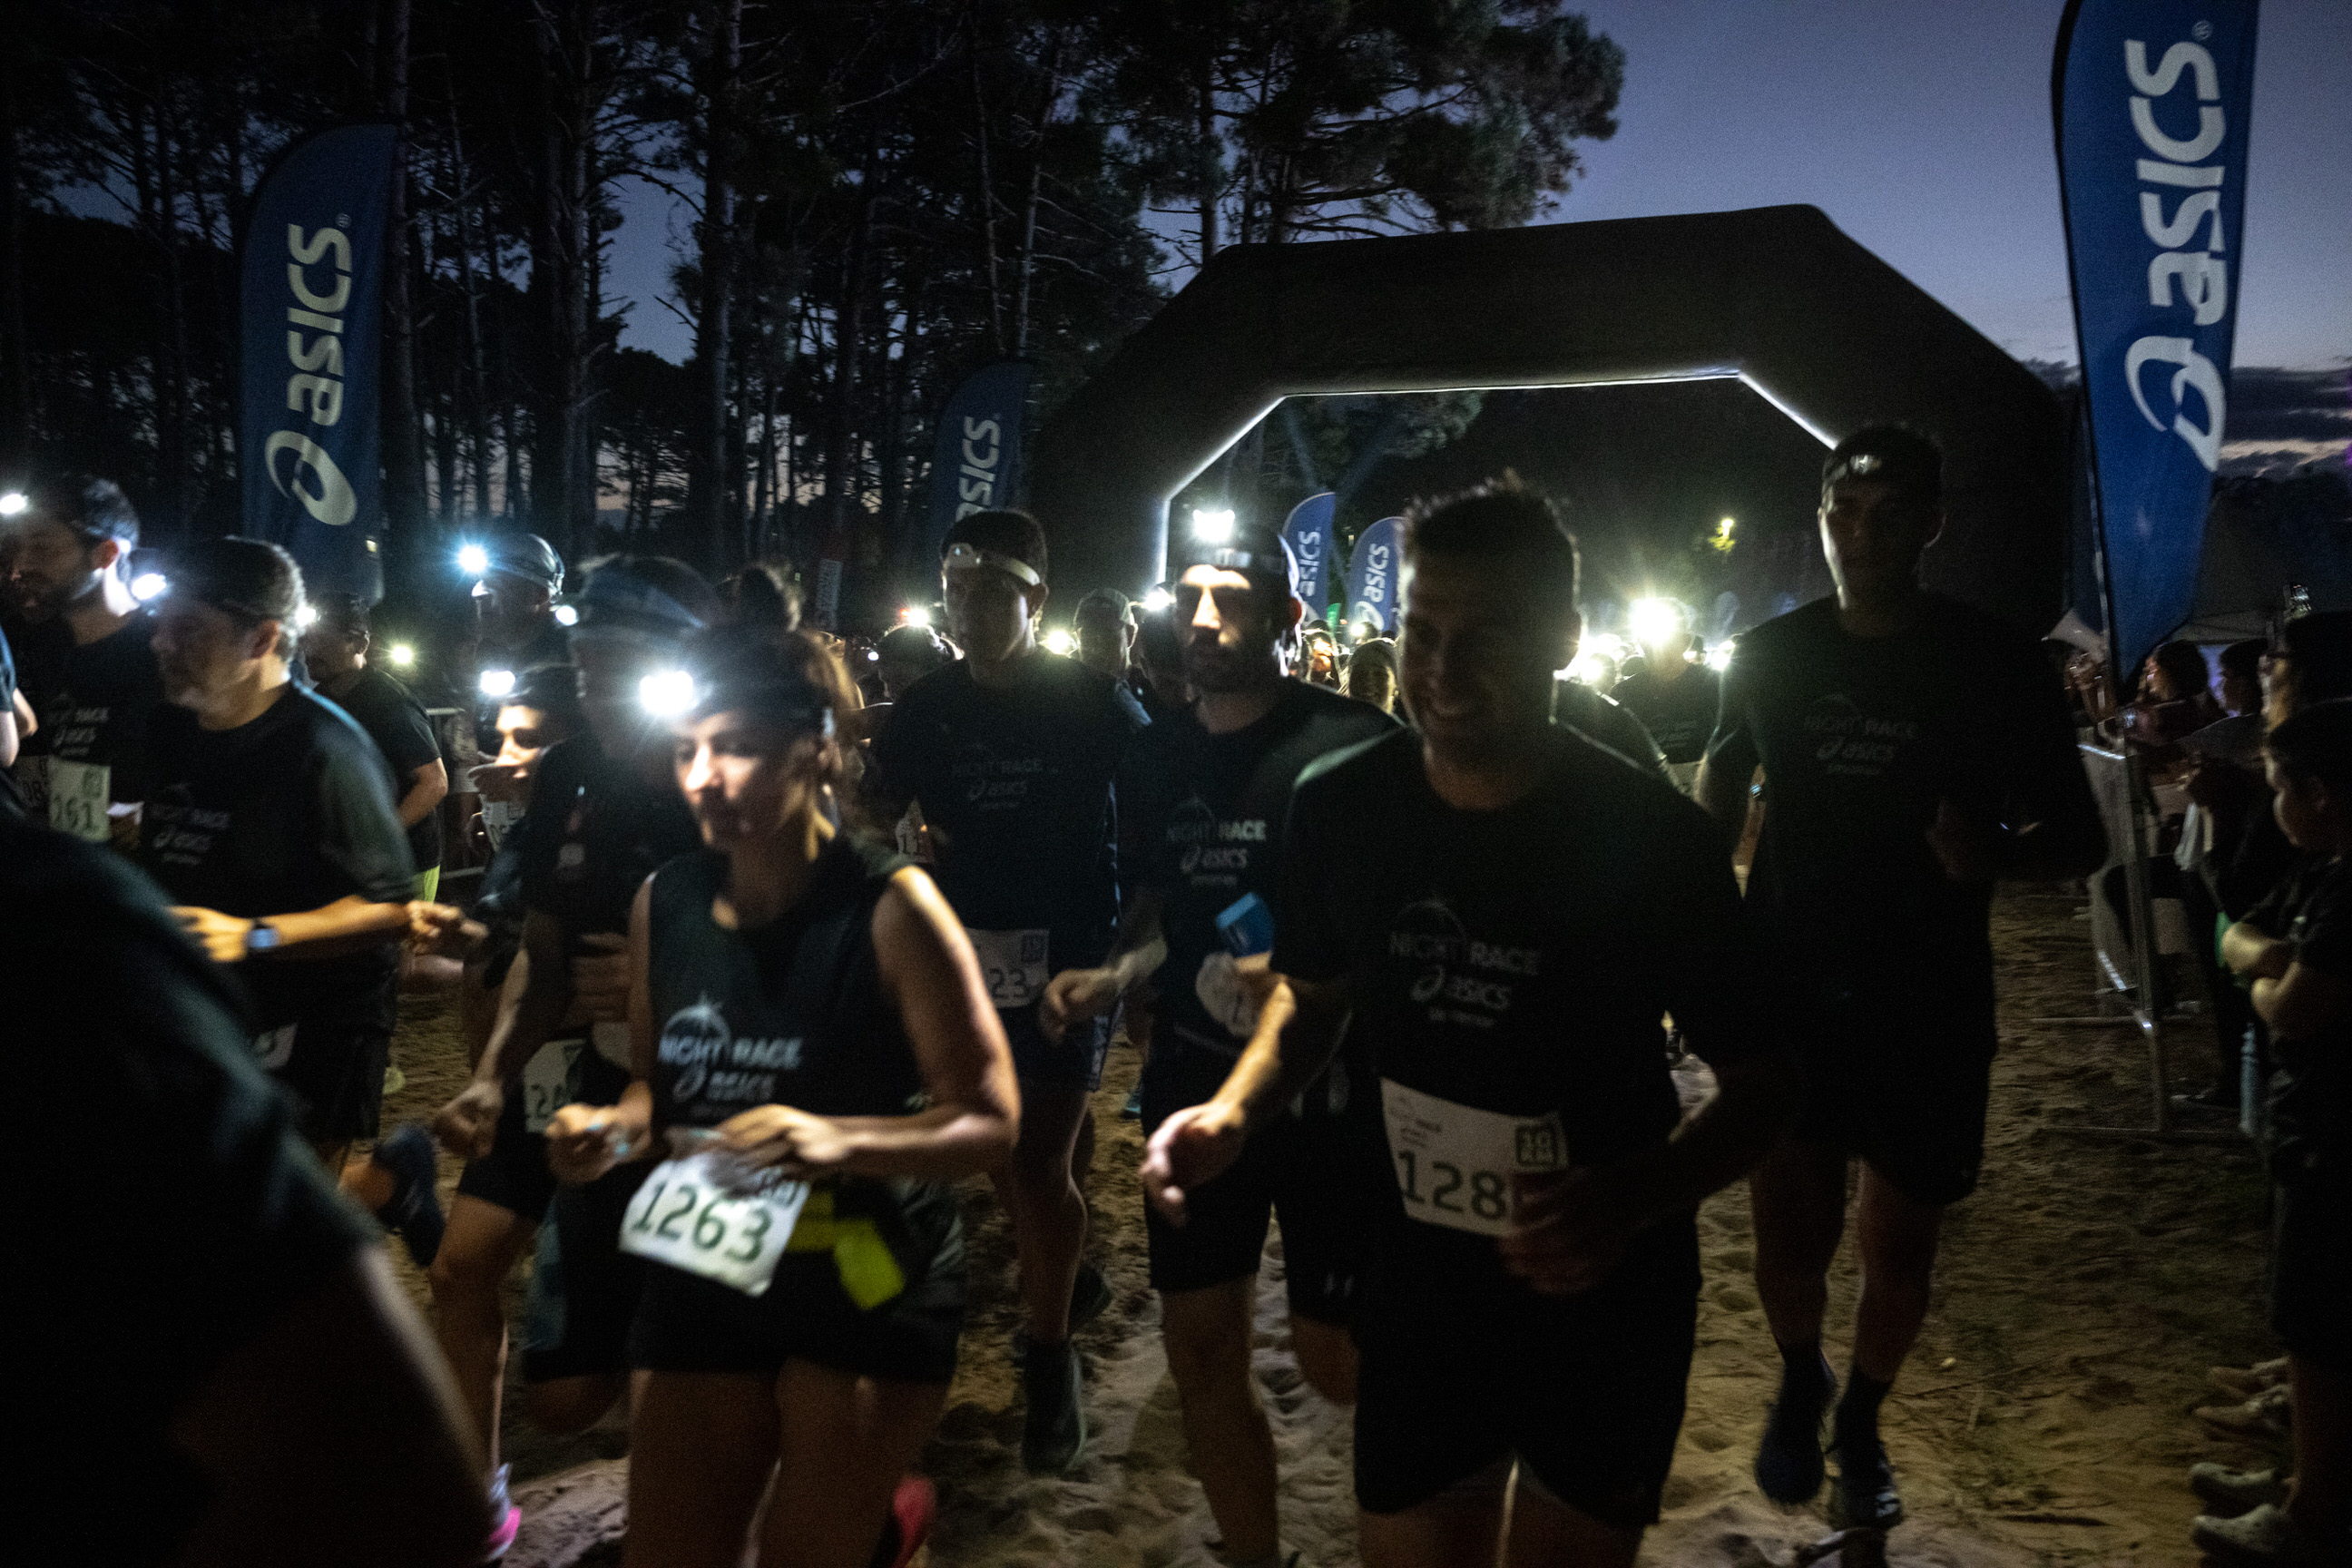 La aventura de una carrera nocturna por los bosques de Pinamar - Infobae